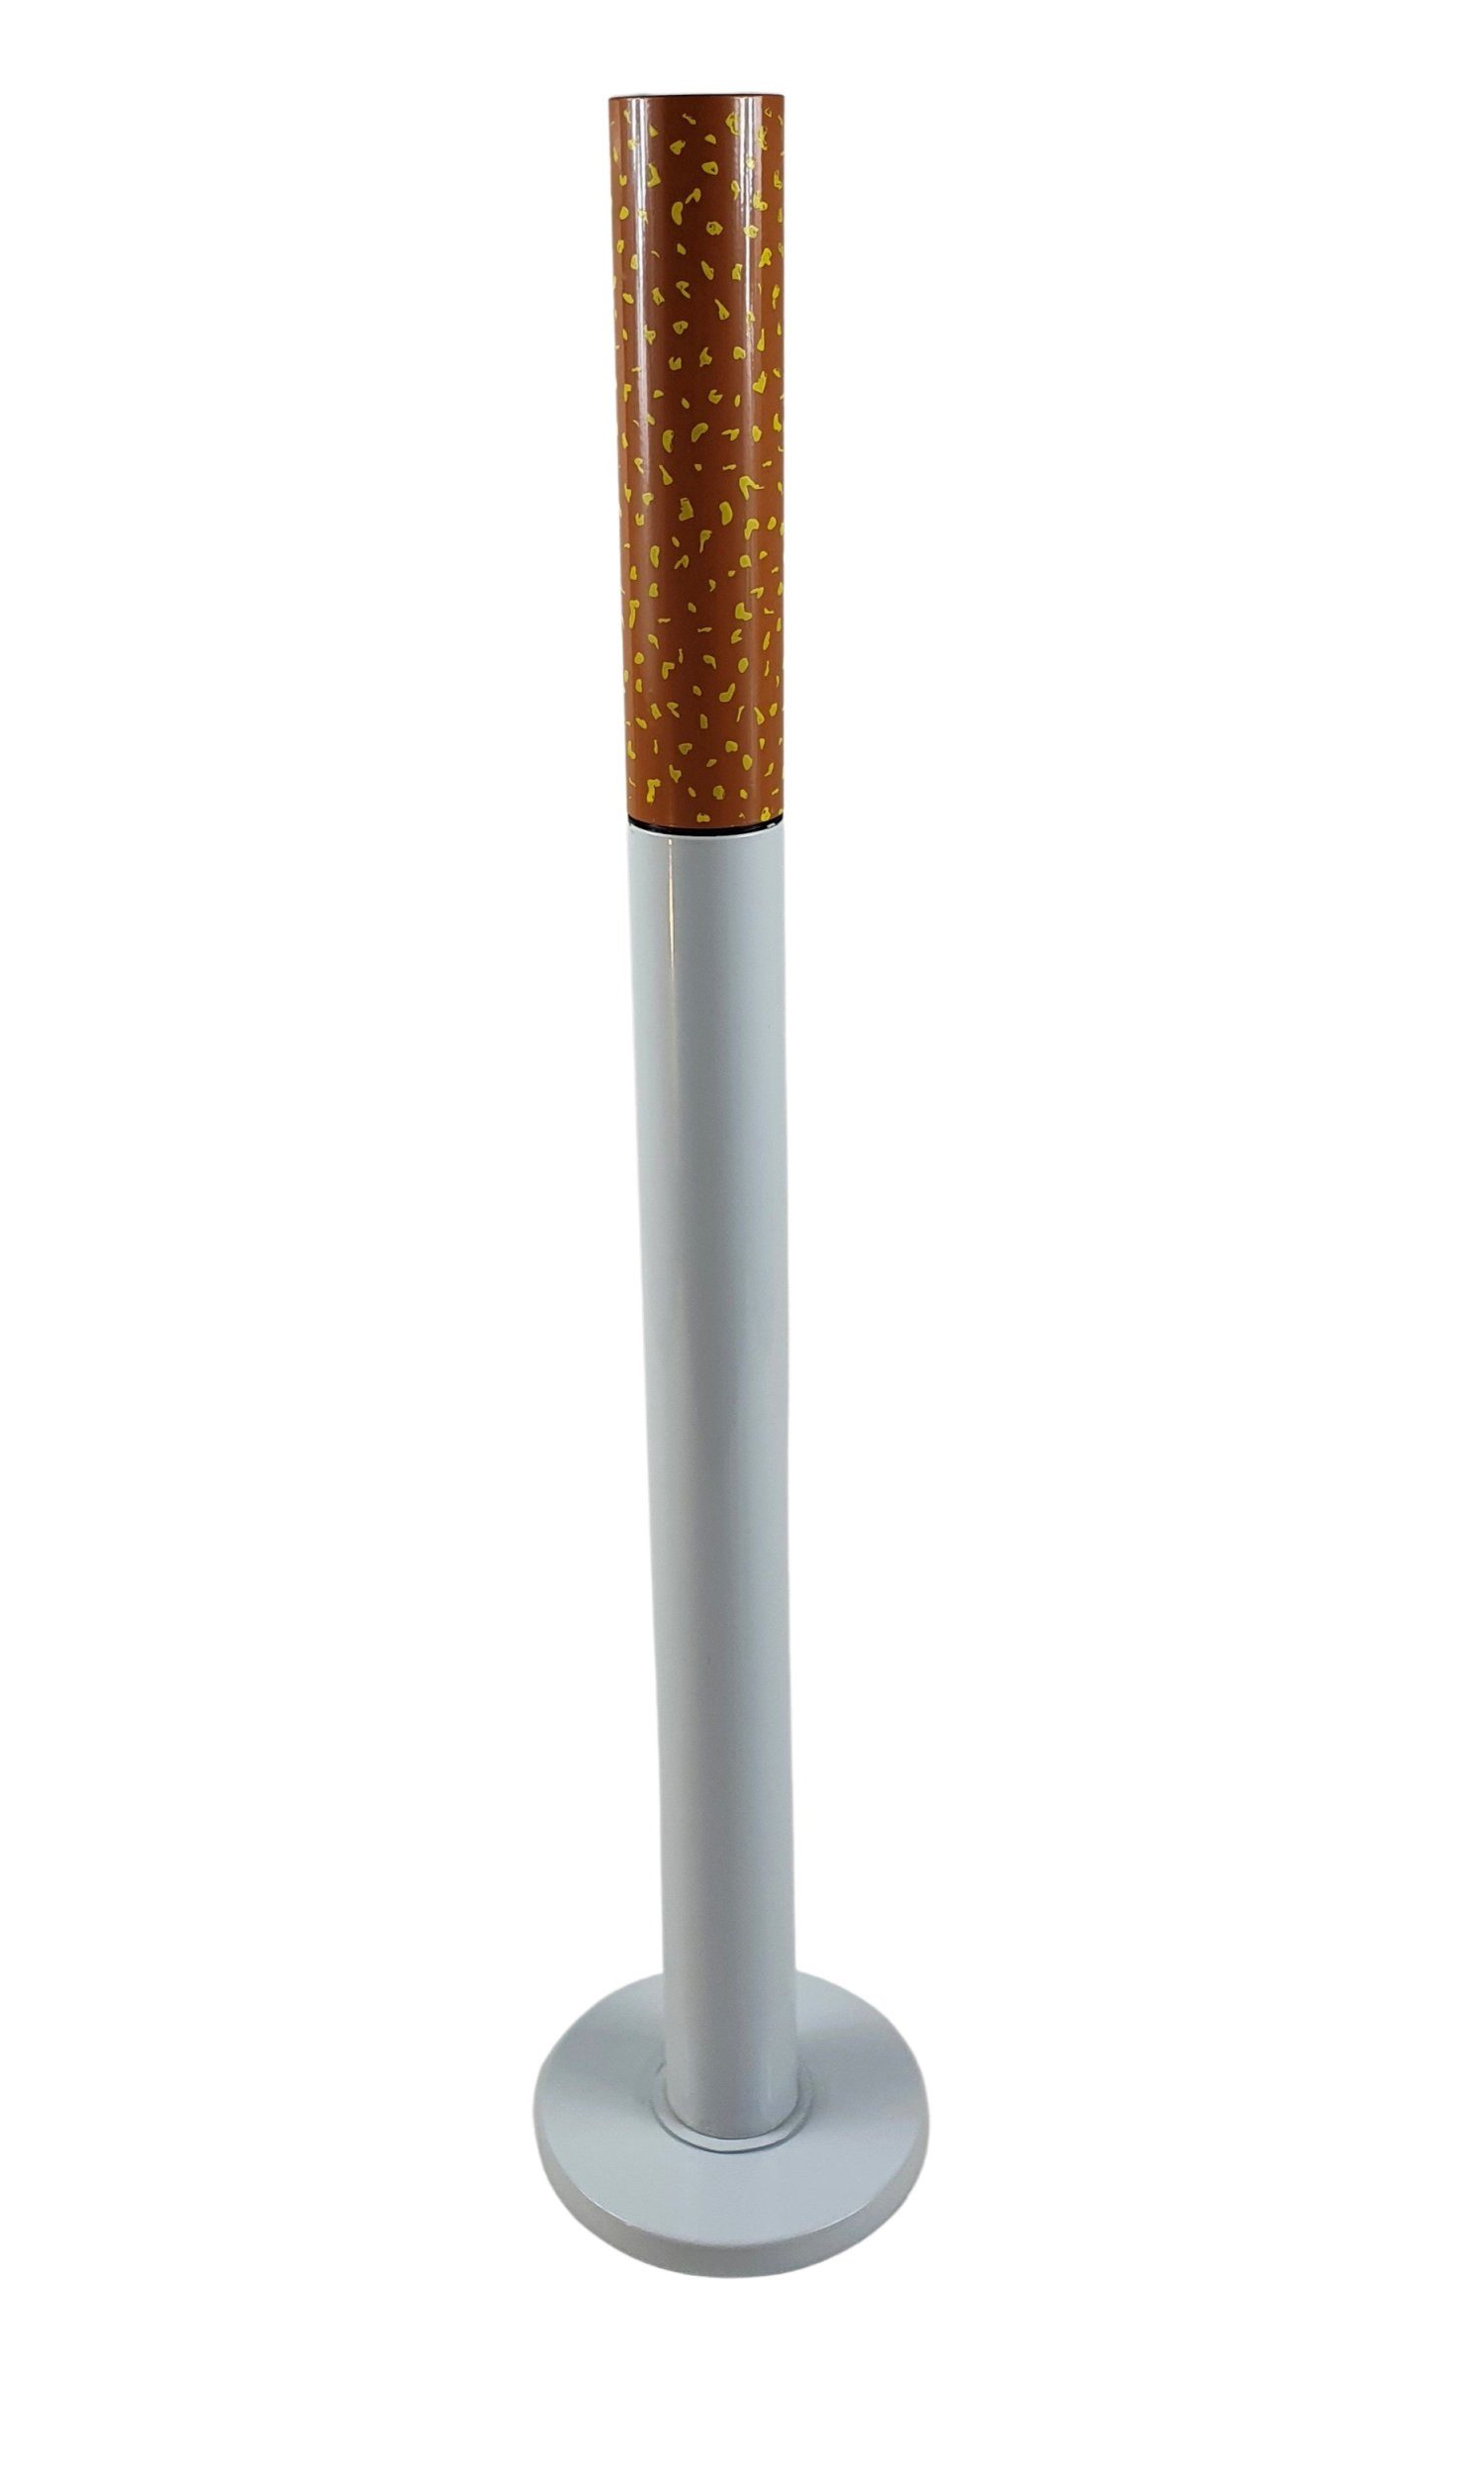 sesua Aschenbecher Standaschenbecher mit Fuß 72 cm Zigarette Aschenbecher